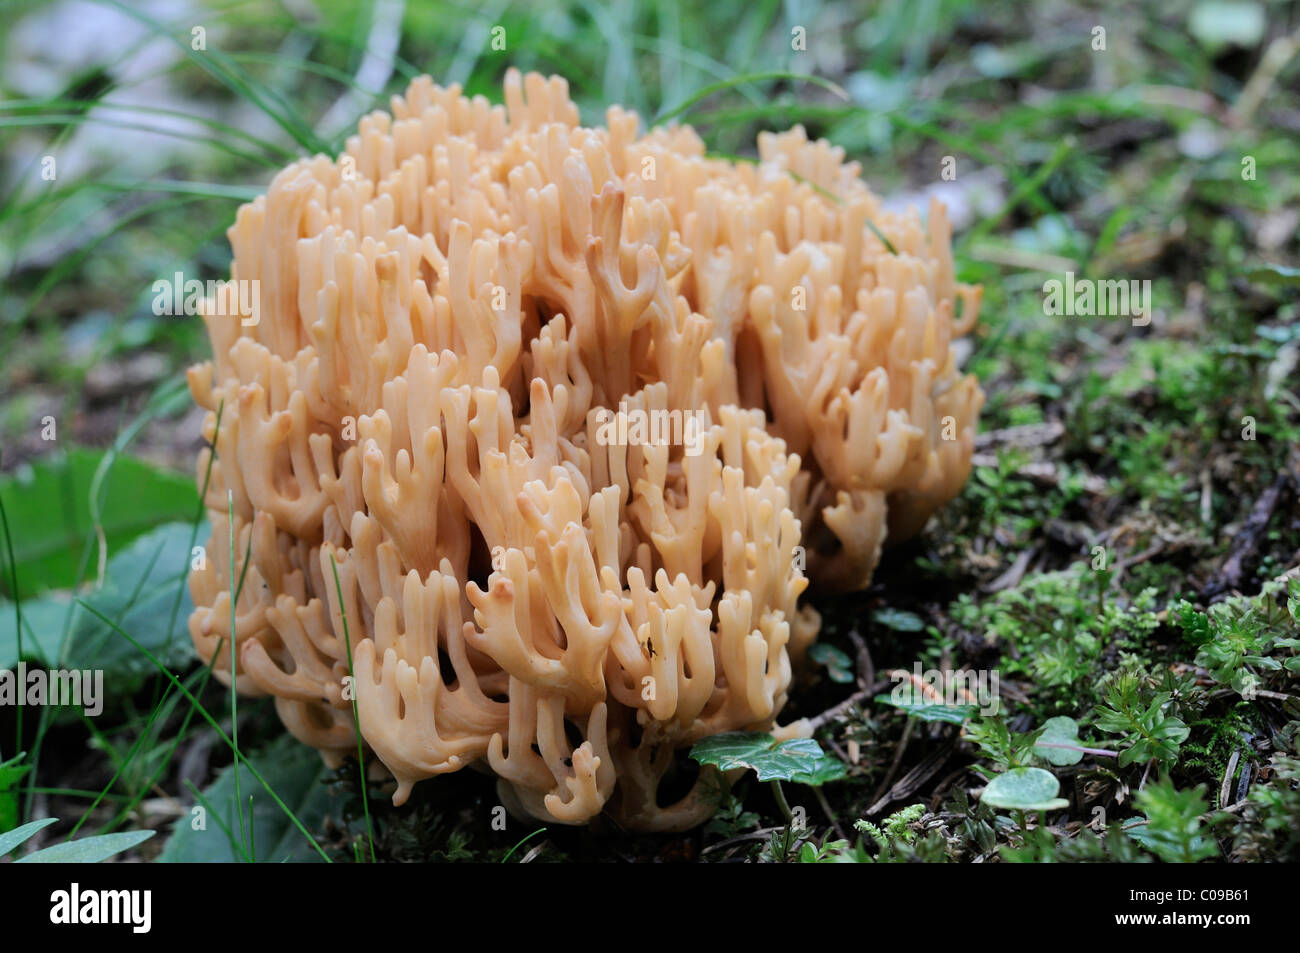 Caulilower coral (Ramaria botrytis), Rax, Lower Austria, Europe Stock Photo